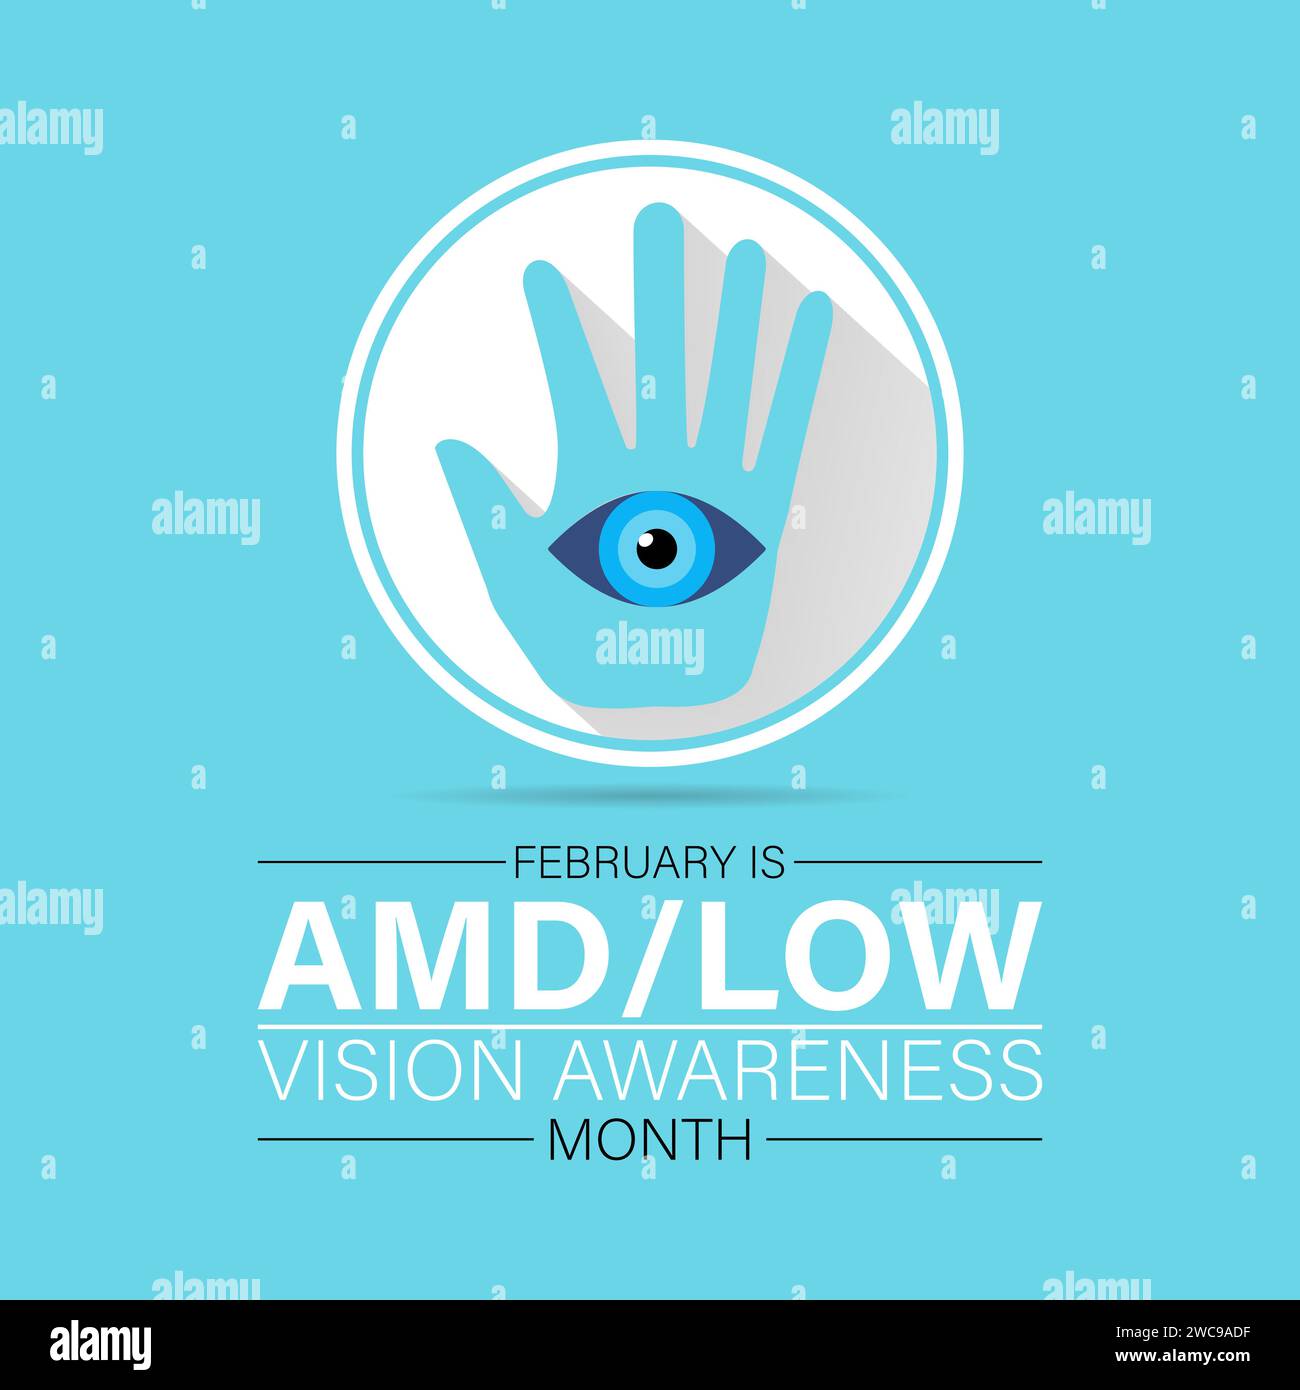 AMD/Low Vision Awareness Monat jedes Jahr im februar beobachtet. Vektor-Gesundheitsbanner, Poster, Vorlagendesign. Stock Vektor